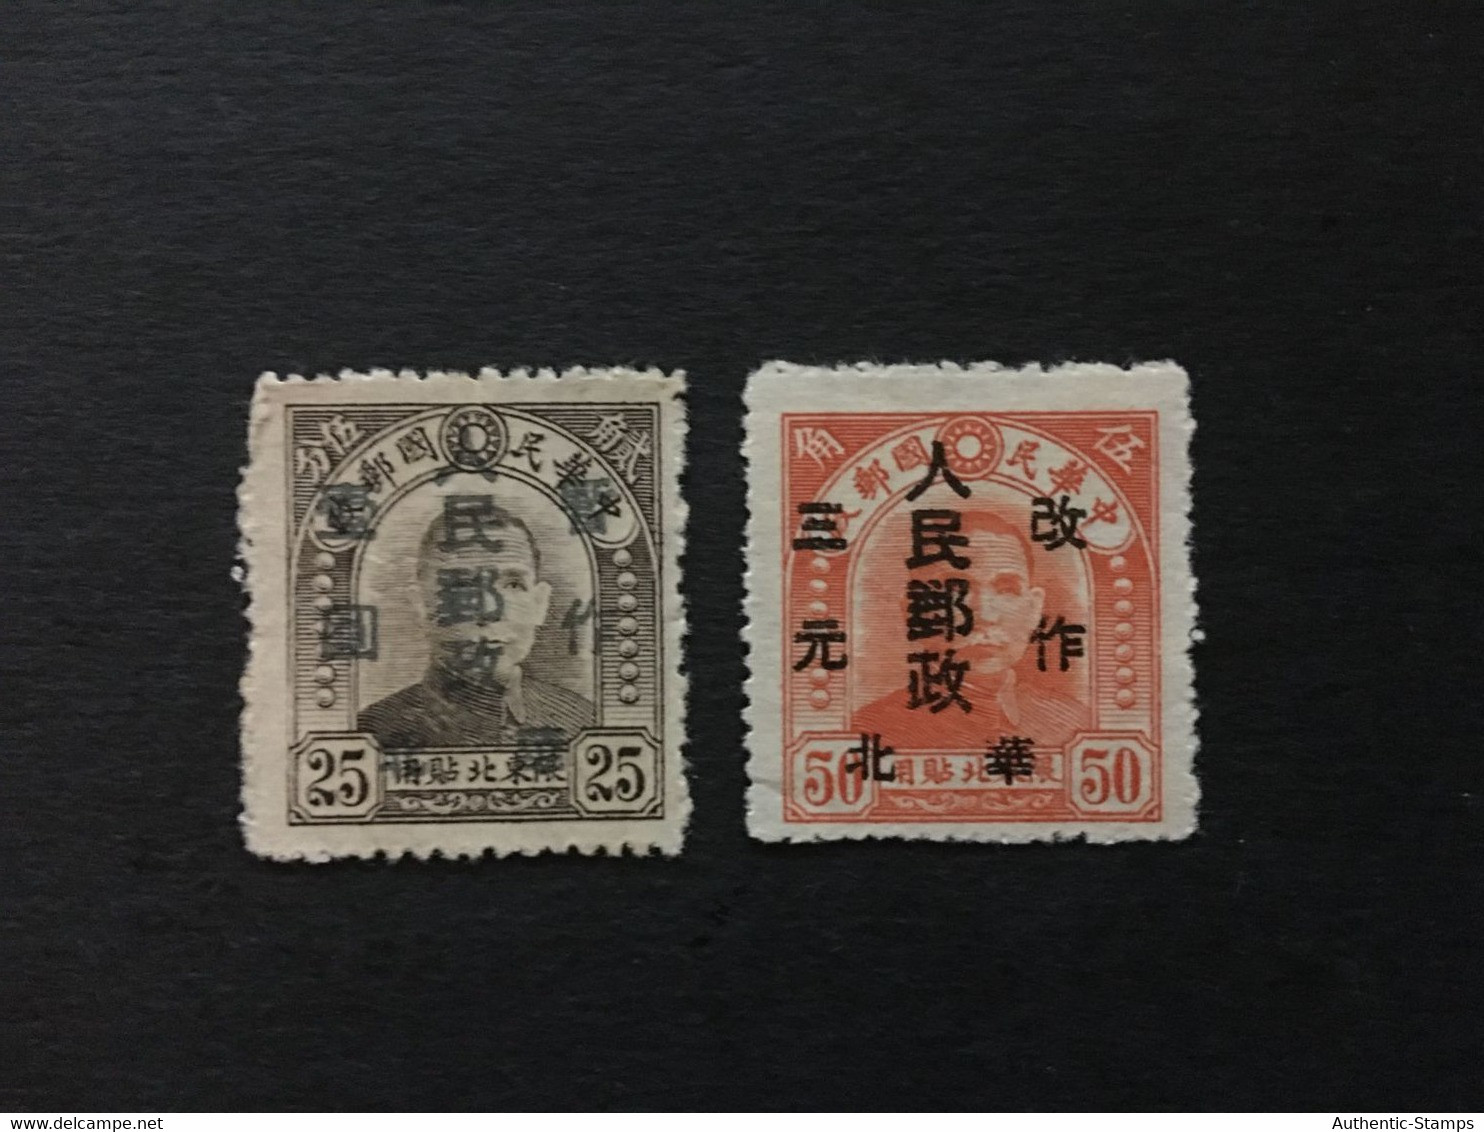 China Stamp Set, Overprint, Liberated Area, CINA,CHINE,LIST1362 - Northern China 1949-50